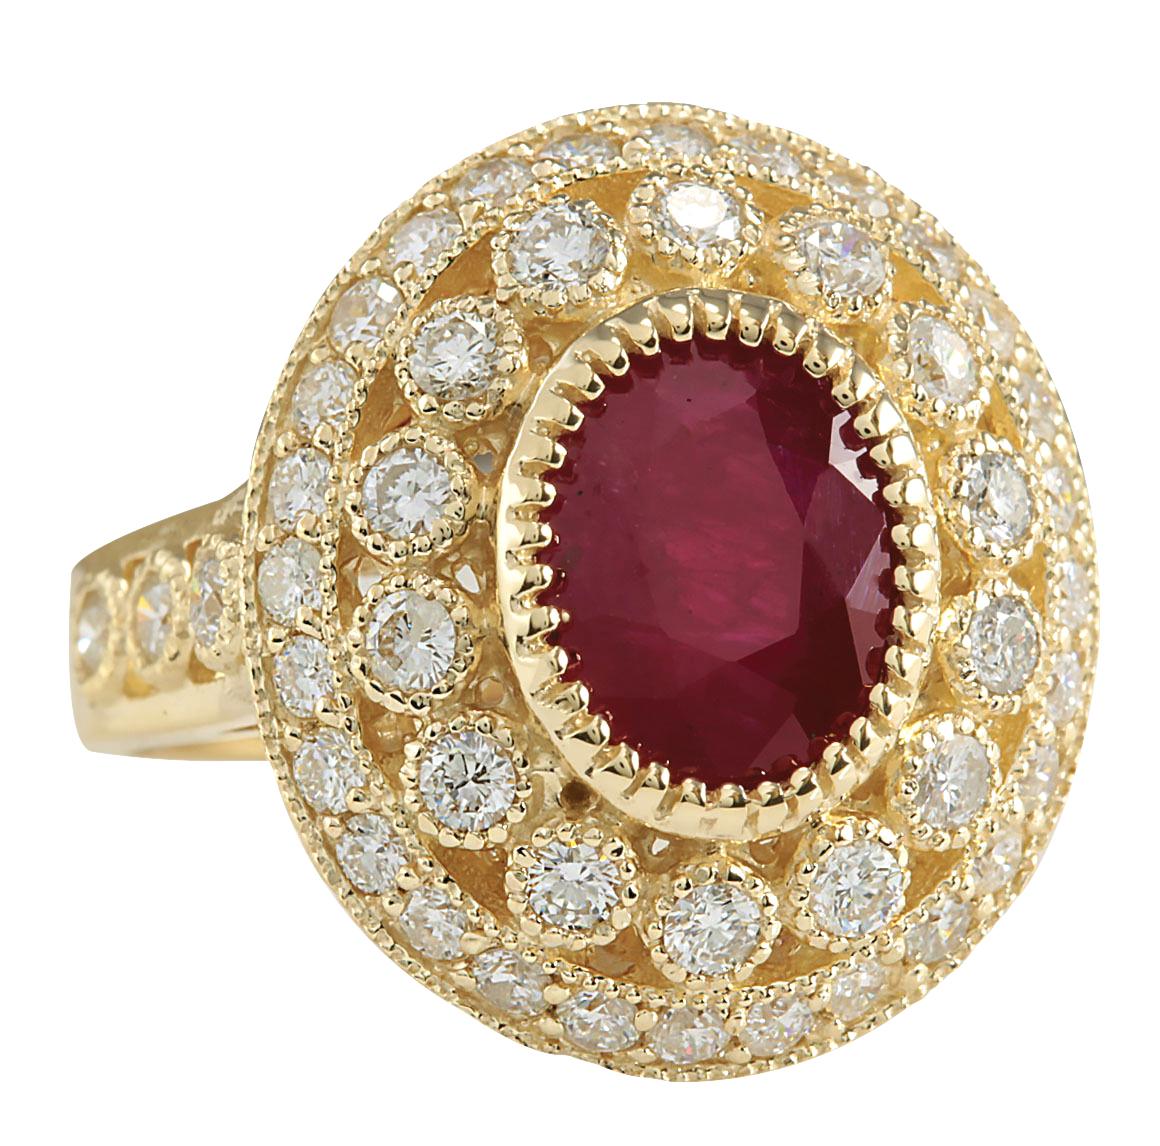 3.64 Carat Natural Ruby 14 Karat Yellow Gold Diamond Ring
Stamped: 14K Yellow Gold
Total Ring Weight: 7.8 Grams
Total Natural Ruby Weight is 2.44 Carat (Measures: 11.00x9.00 mm)
Color: Red
Total Natural Diamond Weight is 1.20 Carat
Color: F-G,